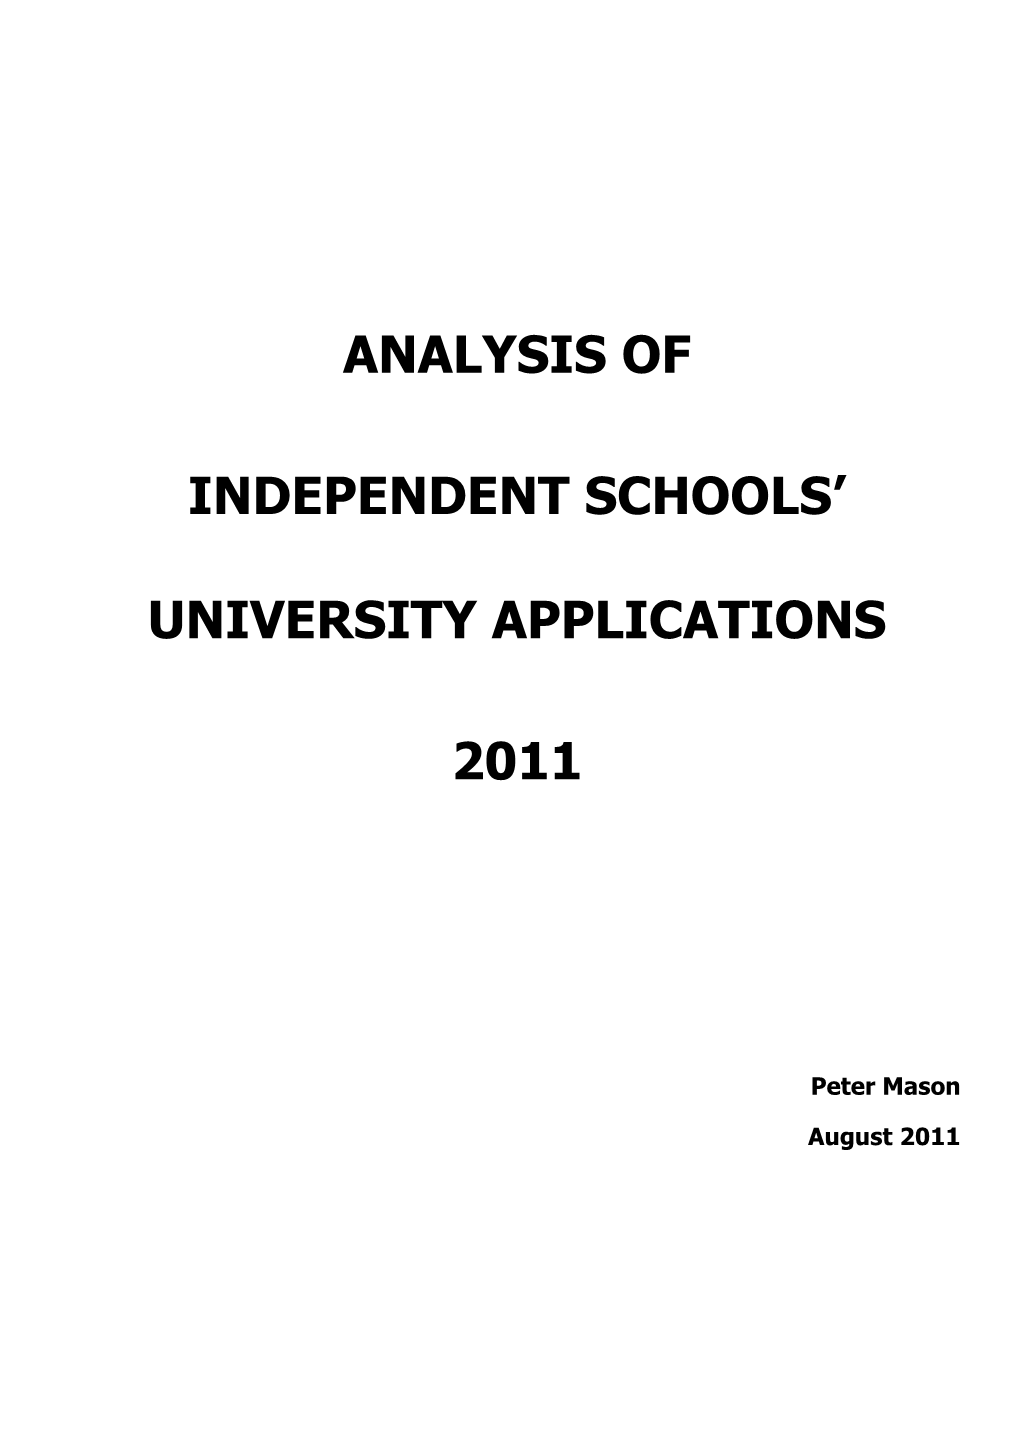 Independent Schools University Applications